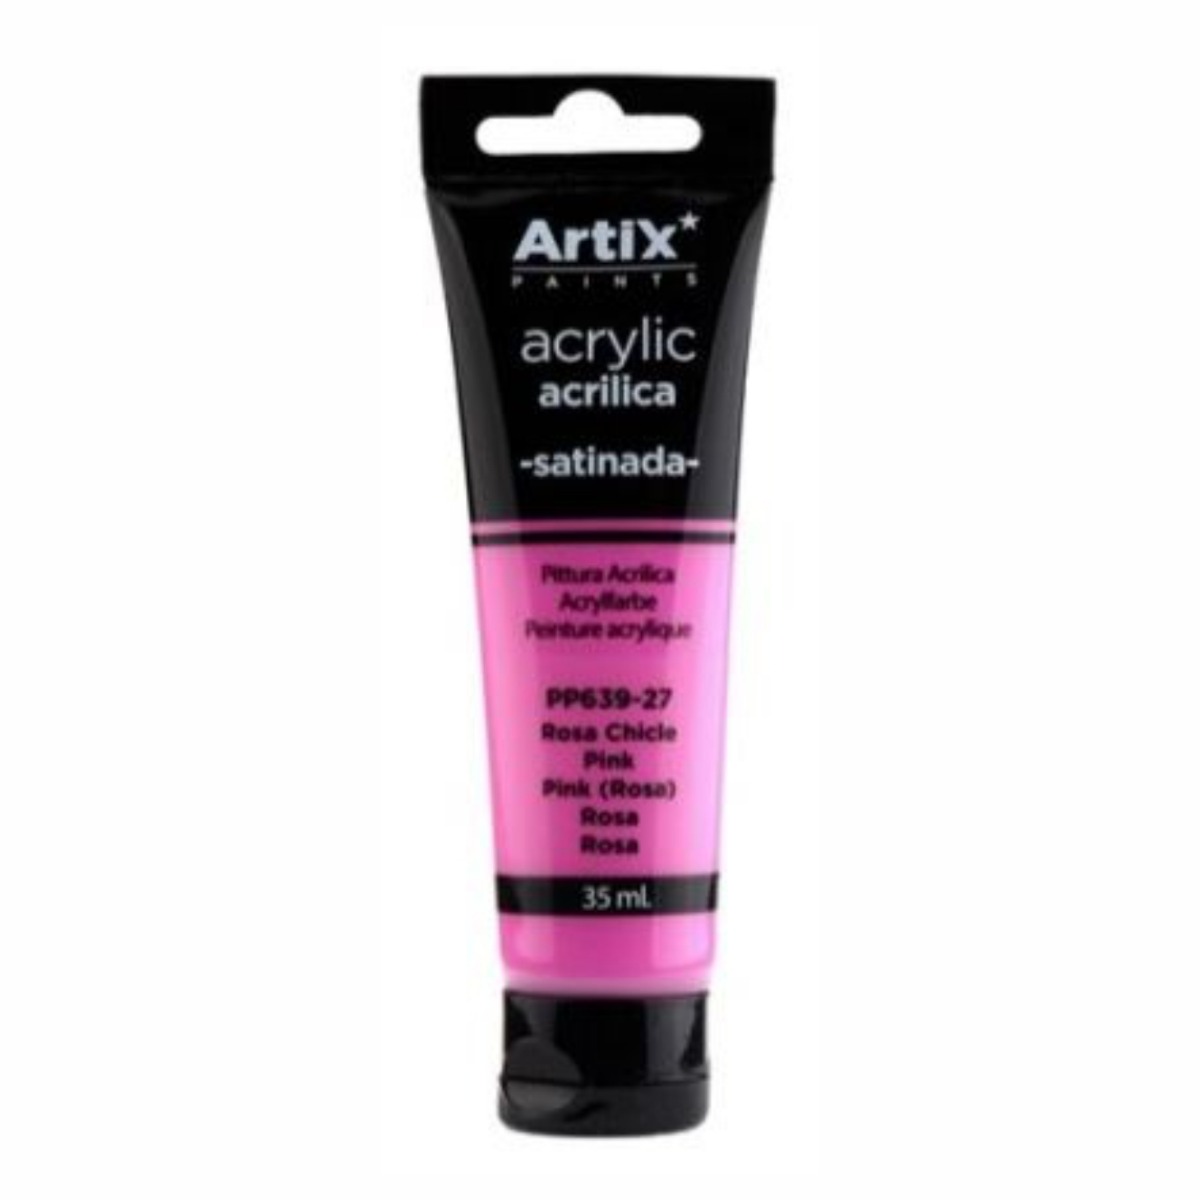 Acrilic roz 35ml Artix PP639-27